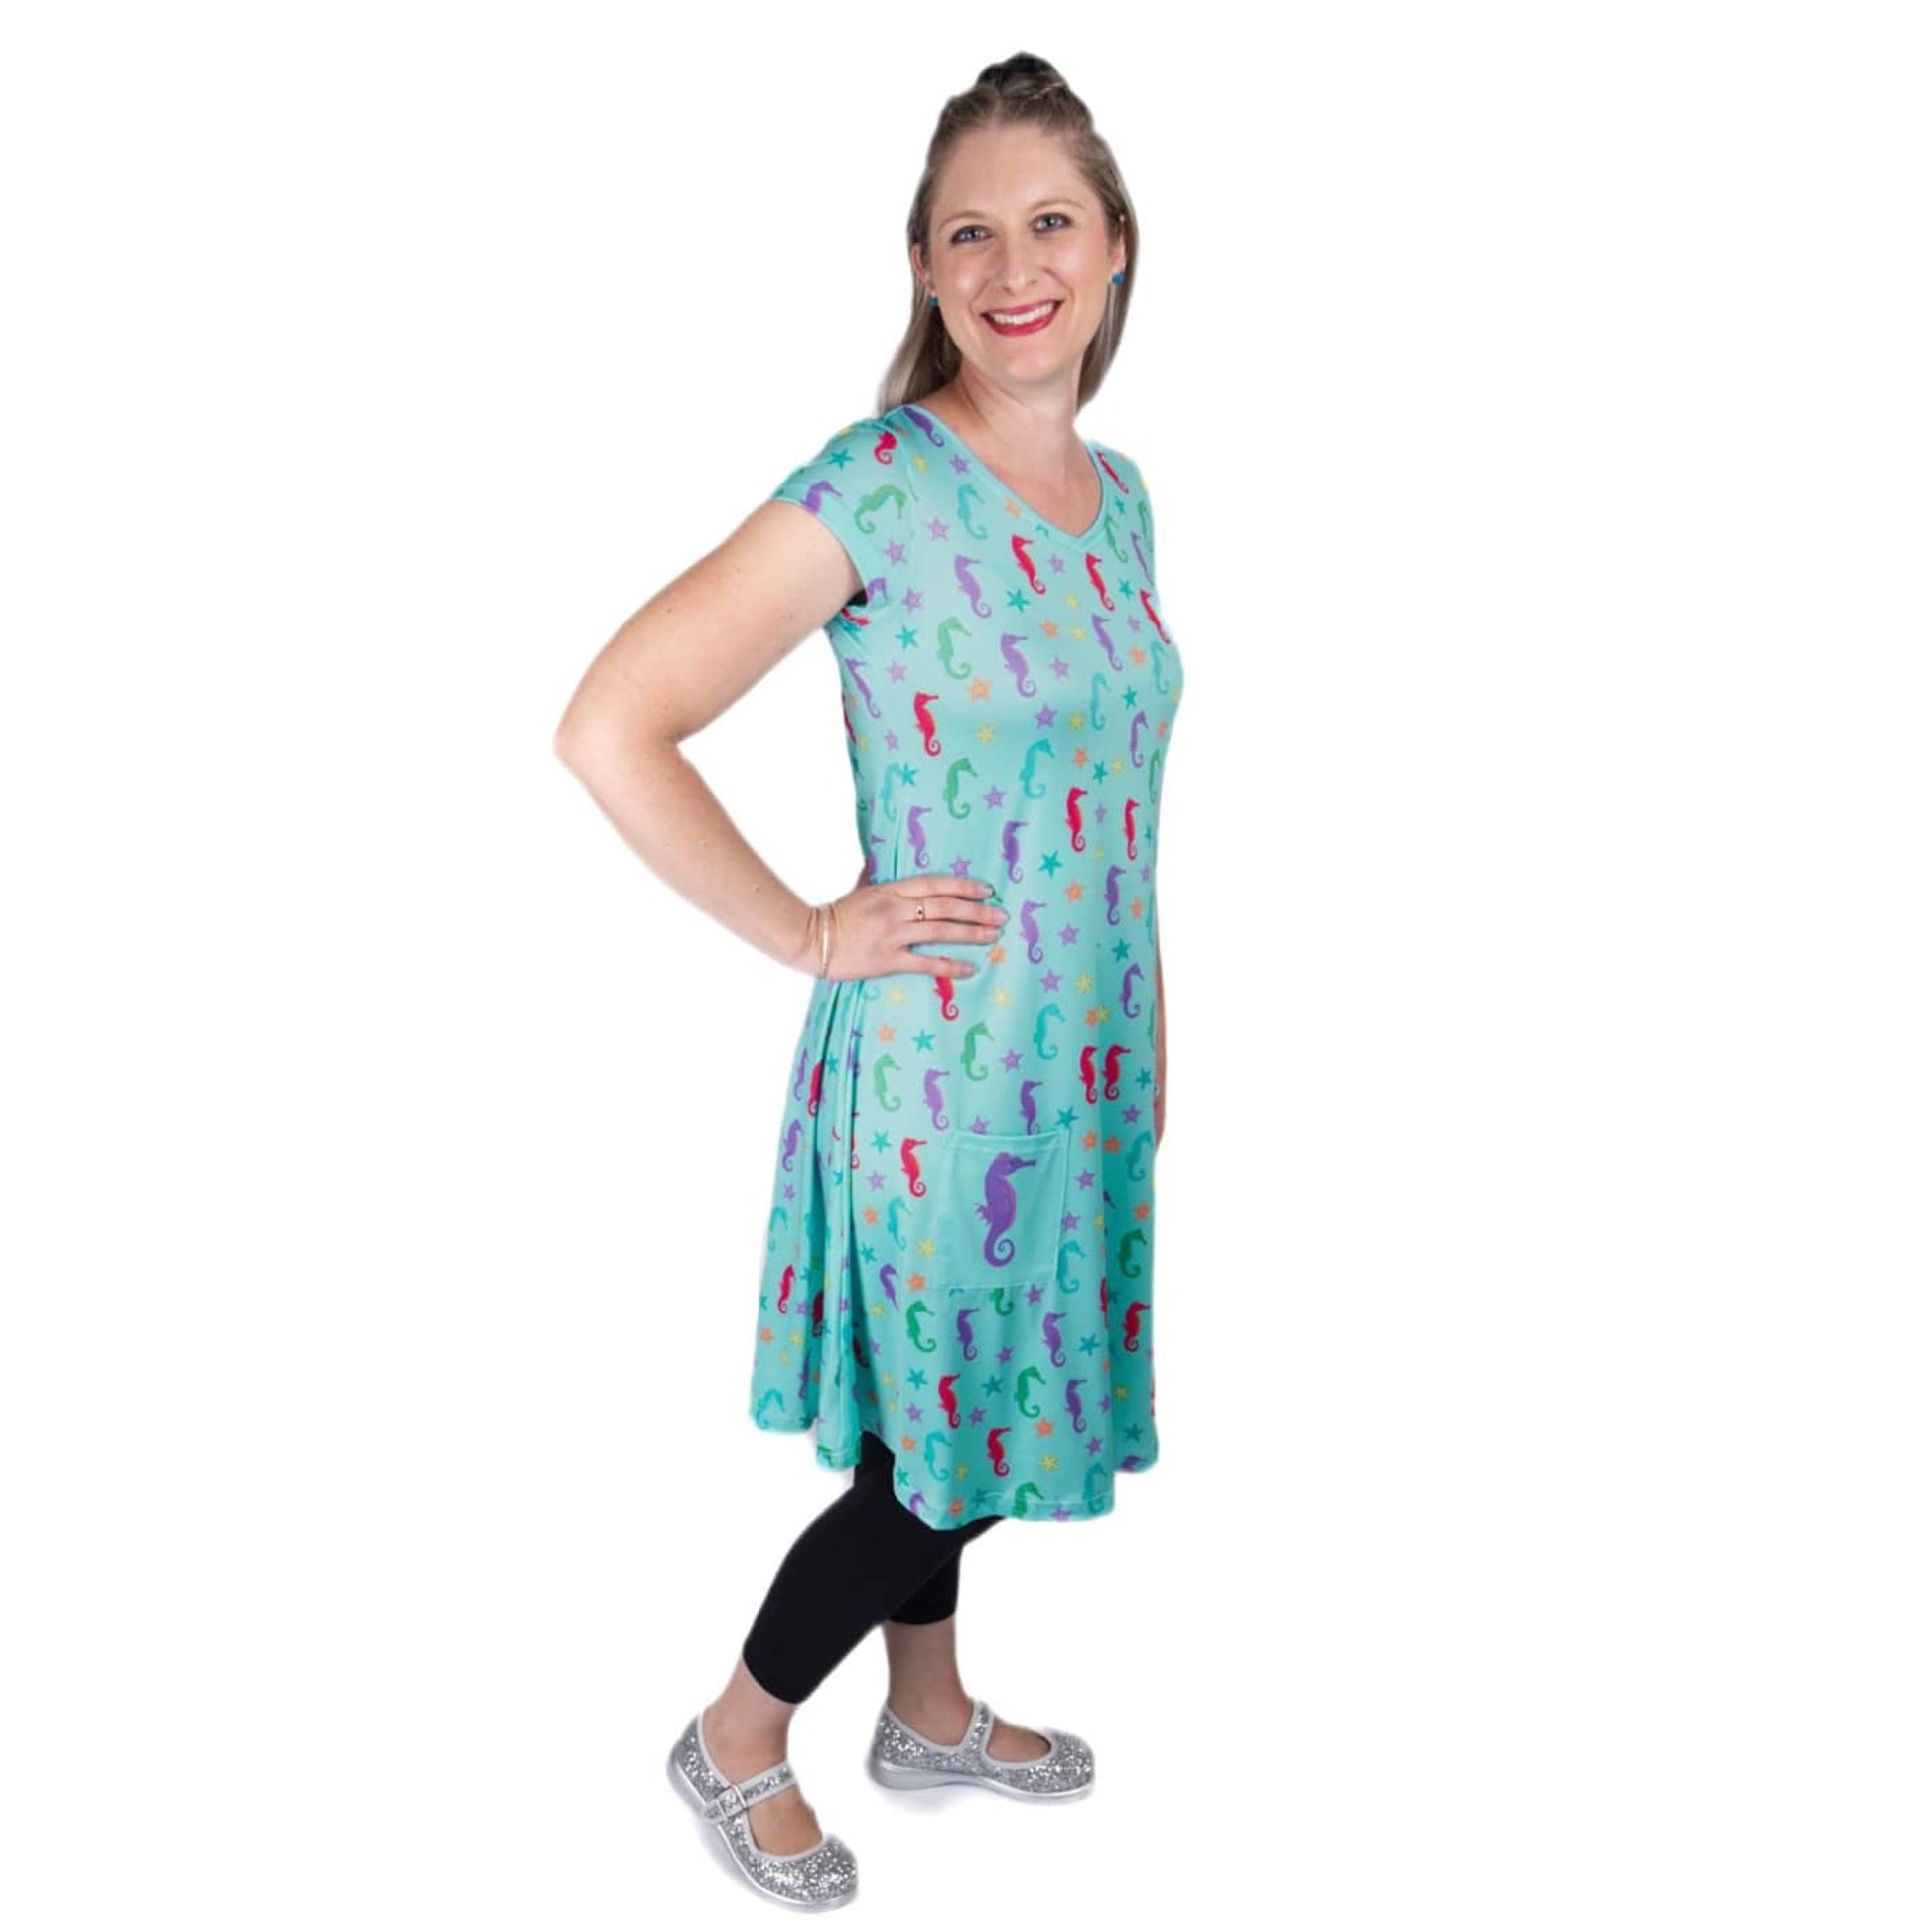 Oceania Tunic Dress by RainbowsAndFairies.com.au (Seahorse - Starfish - Under The Sea - Ocean - Vintage Inspired - Kitsch - Dress With Pockets - Mod) - SKU: CL_TUNDR_OCEAN_ORG - Pic-02